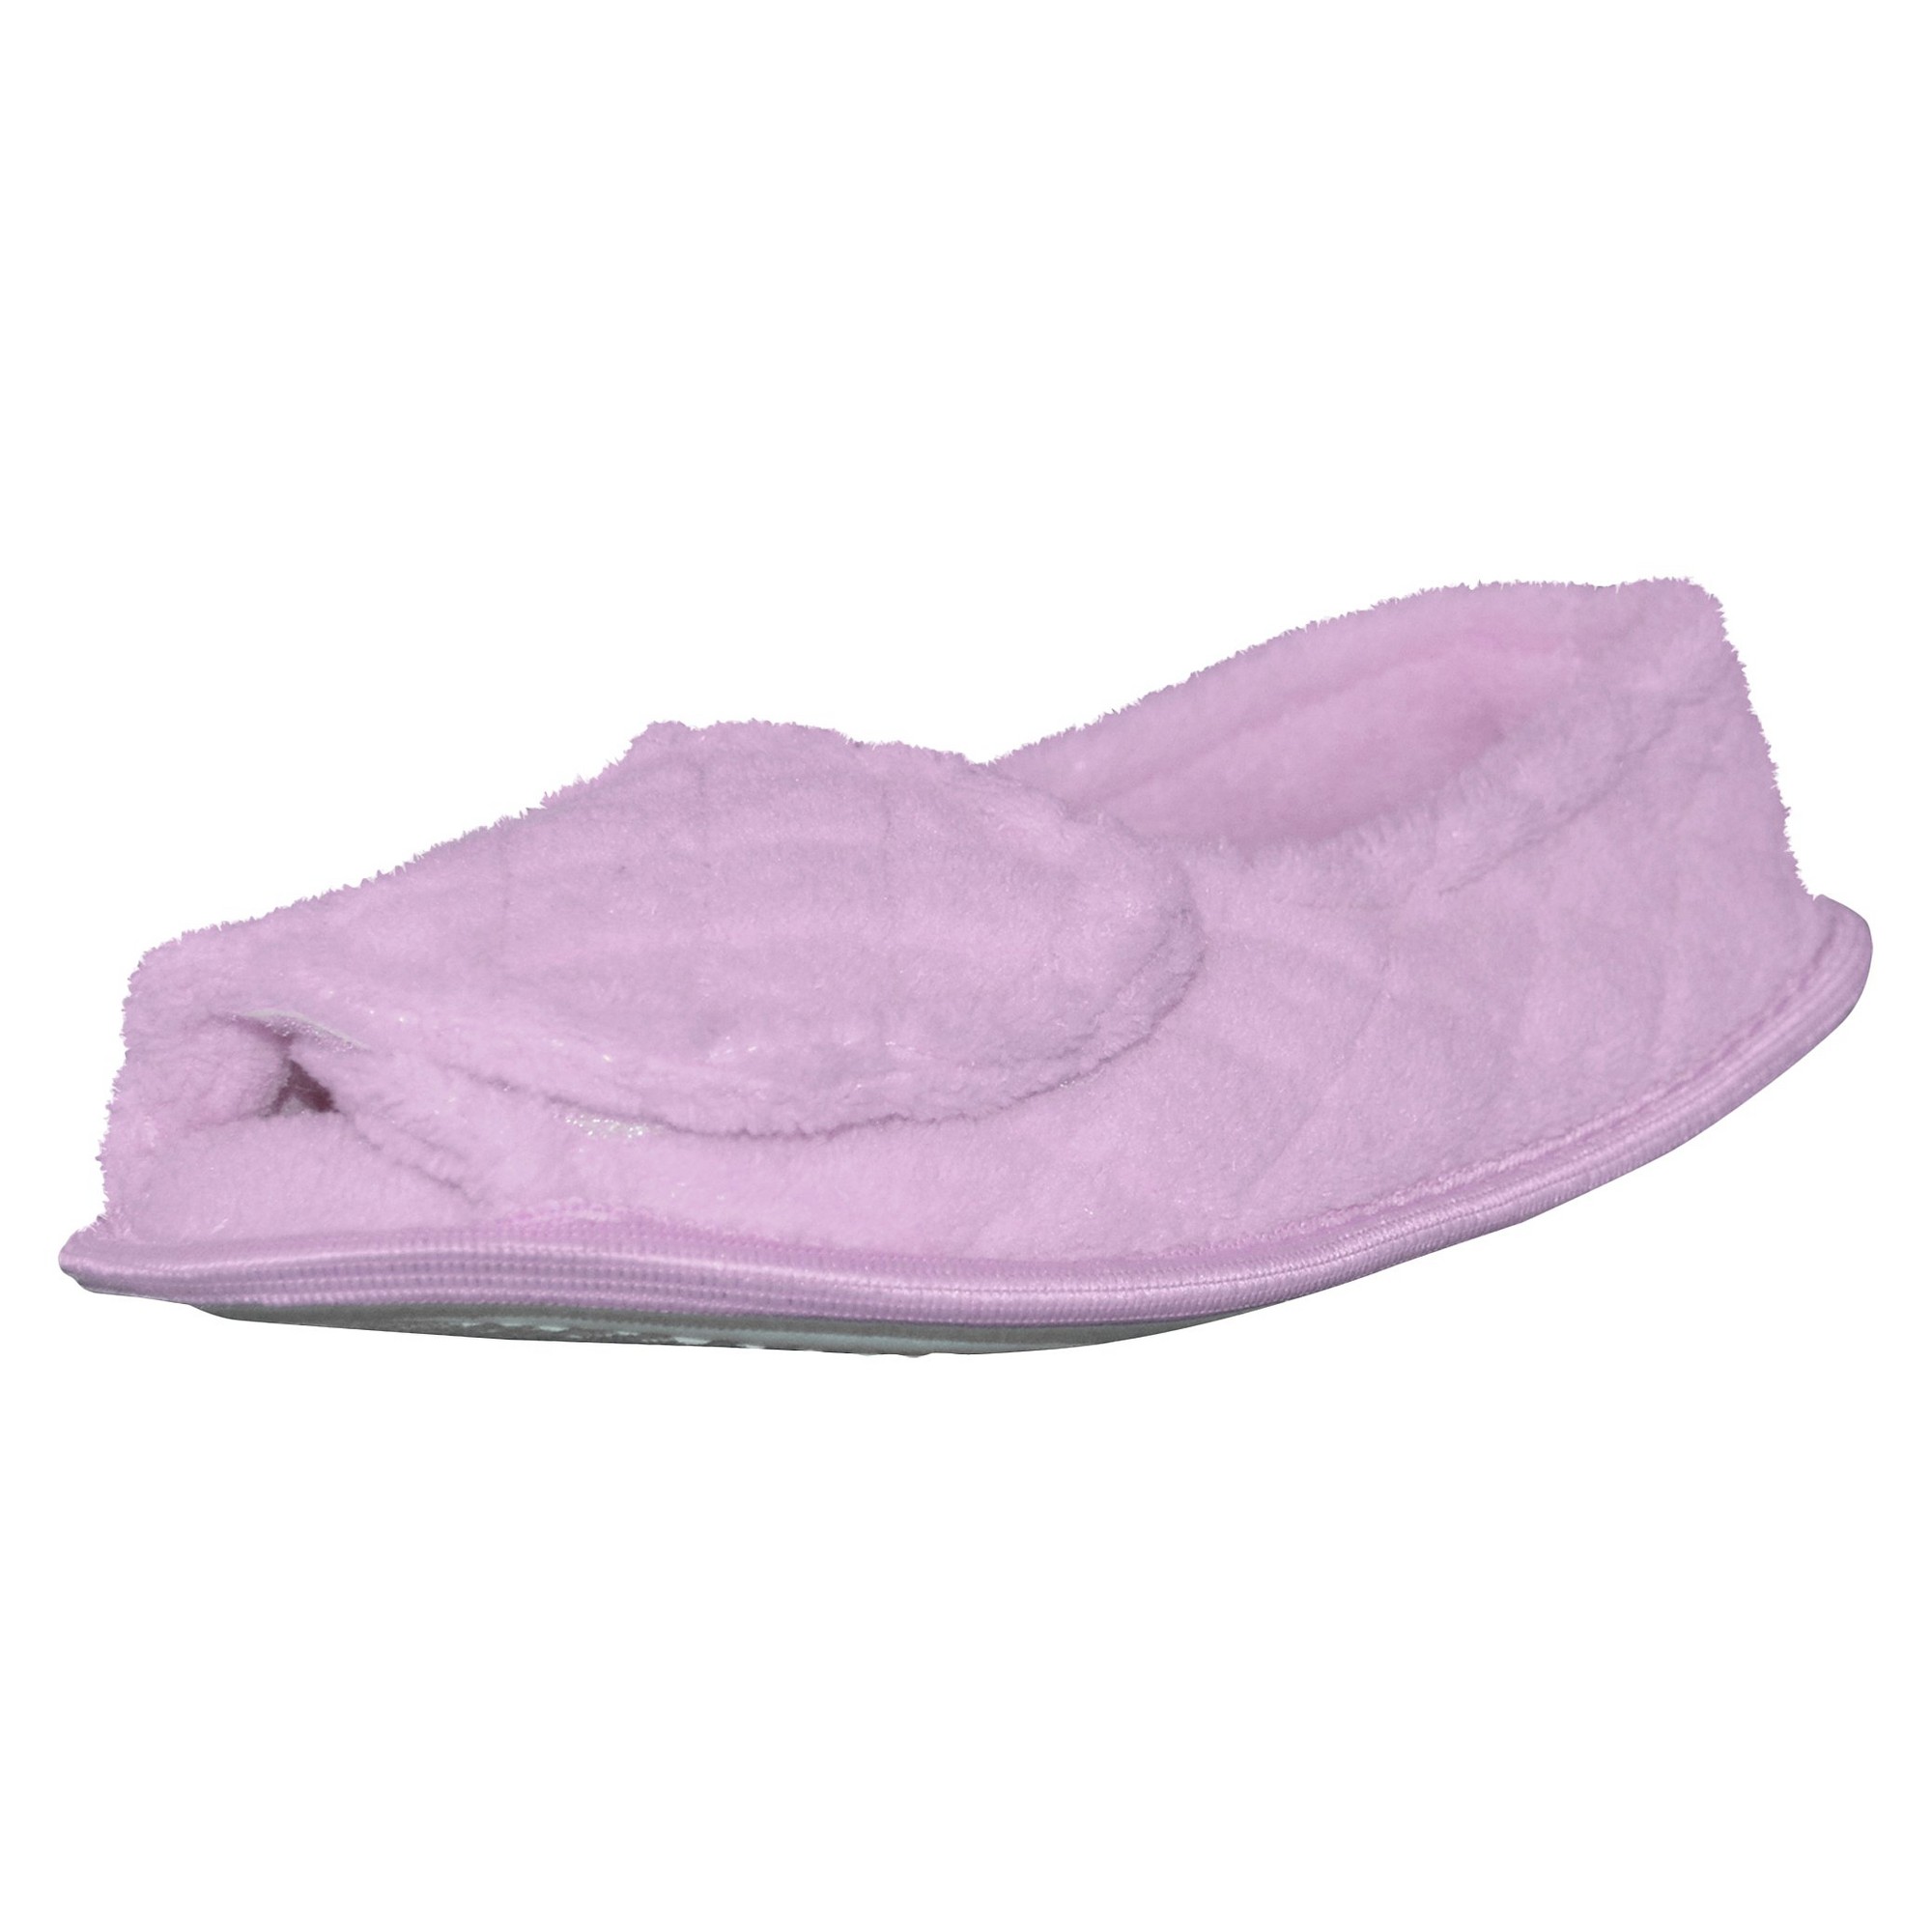 Women's MUK LUKS Micro Chenille Slippers - Lavender M(6-7), Size: Medium (6-7), Purple